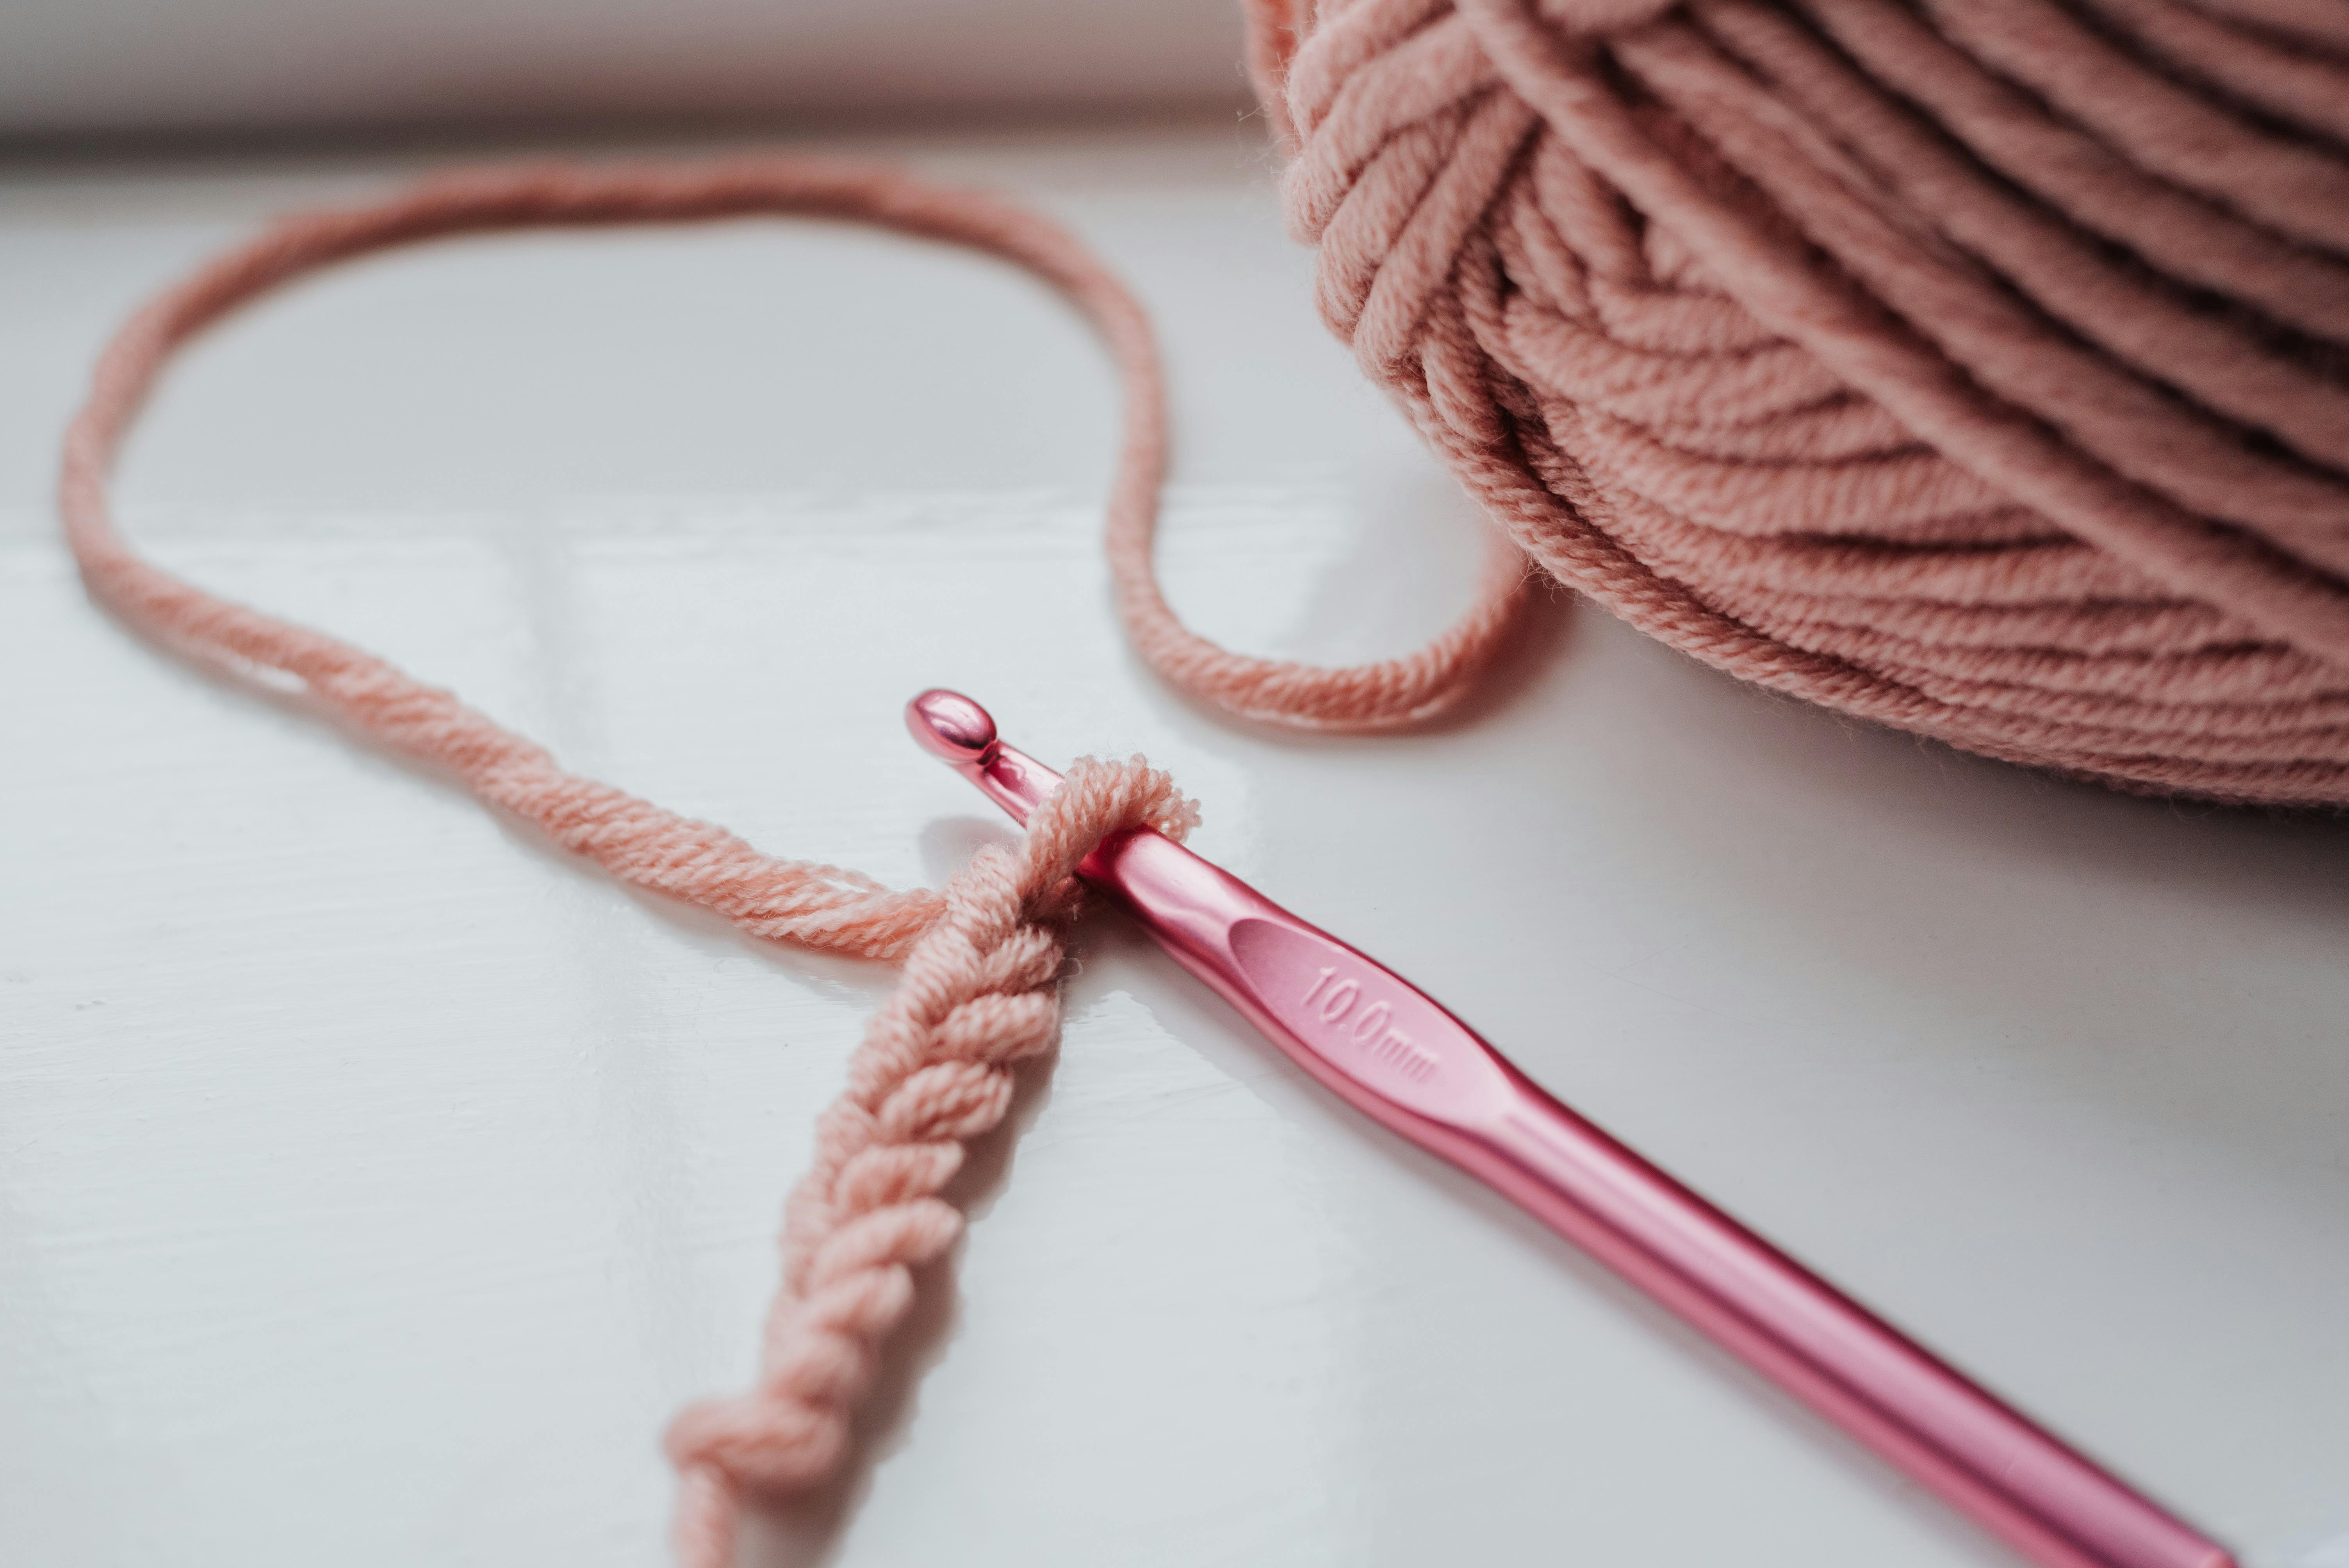 Crochet hook and thread